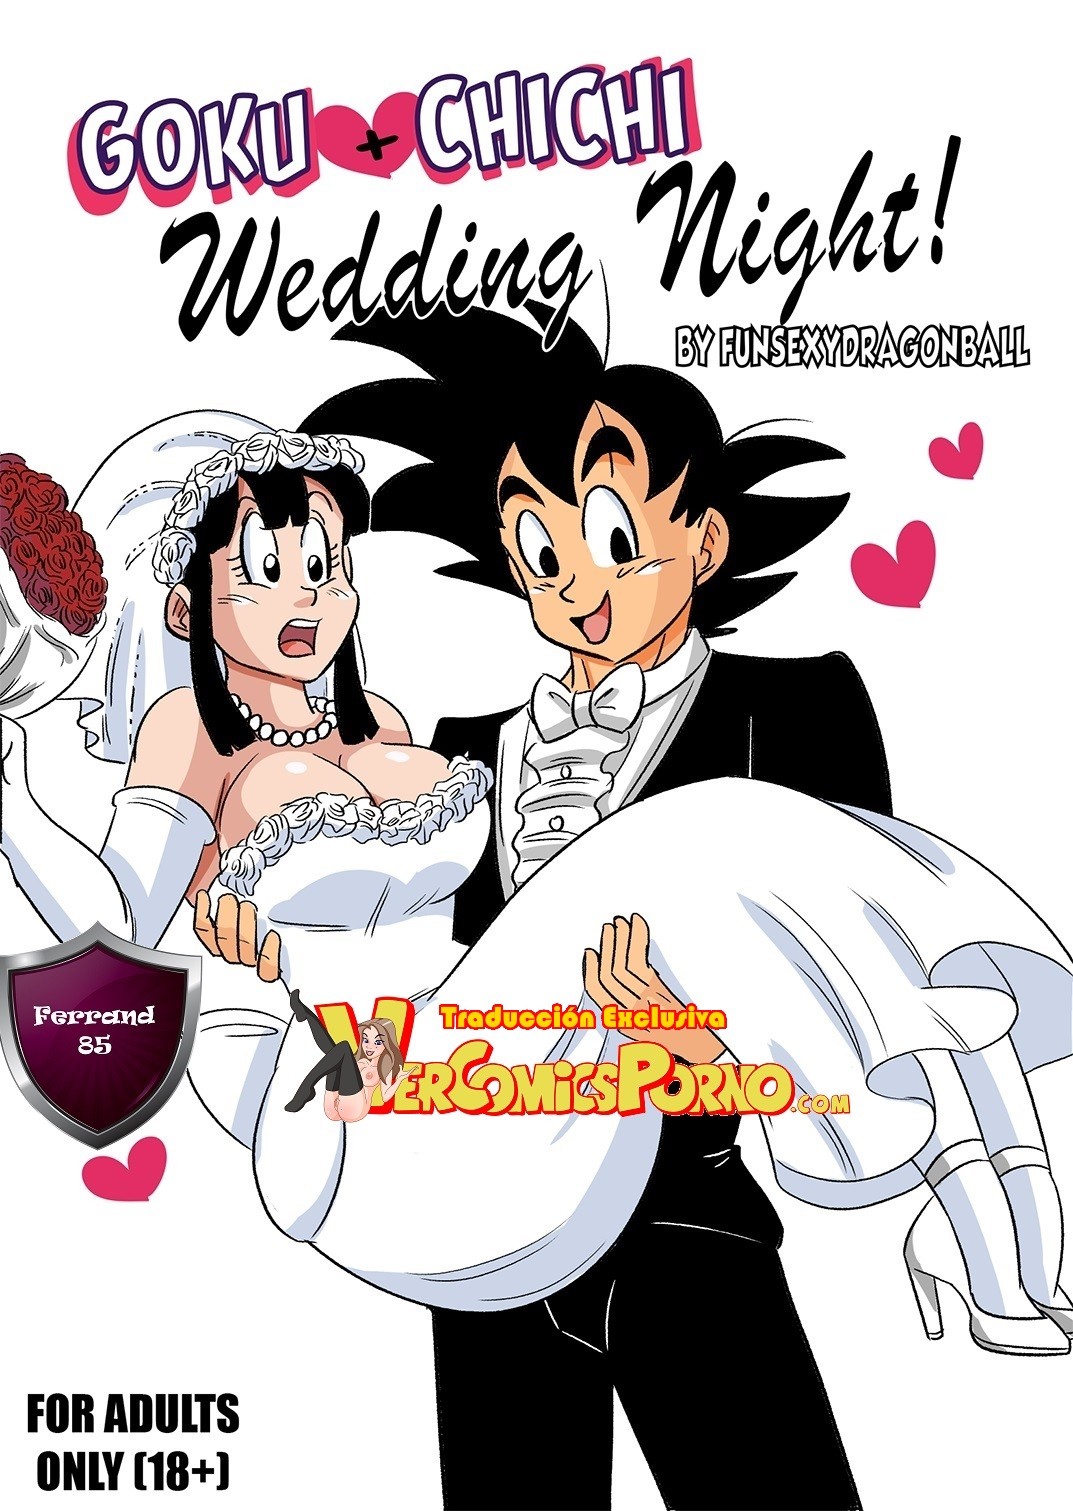 Goku Chichi Wedding Traduccion Exclusiva